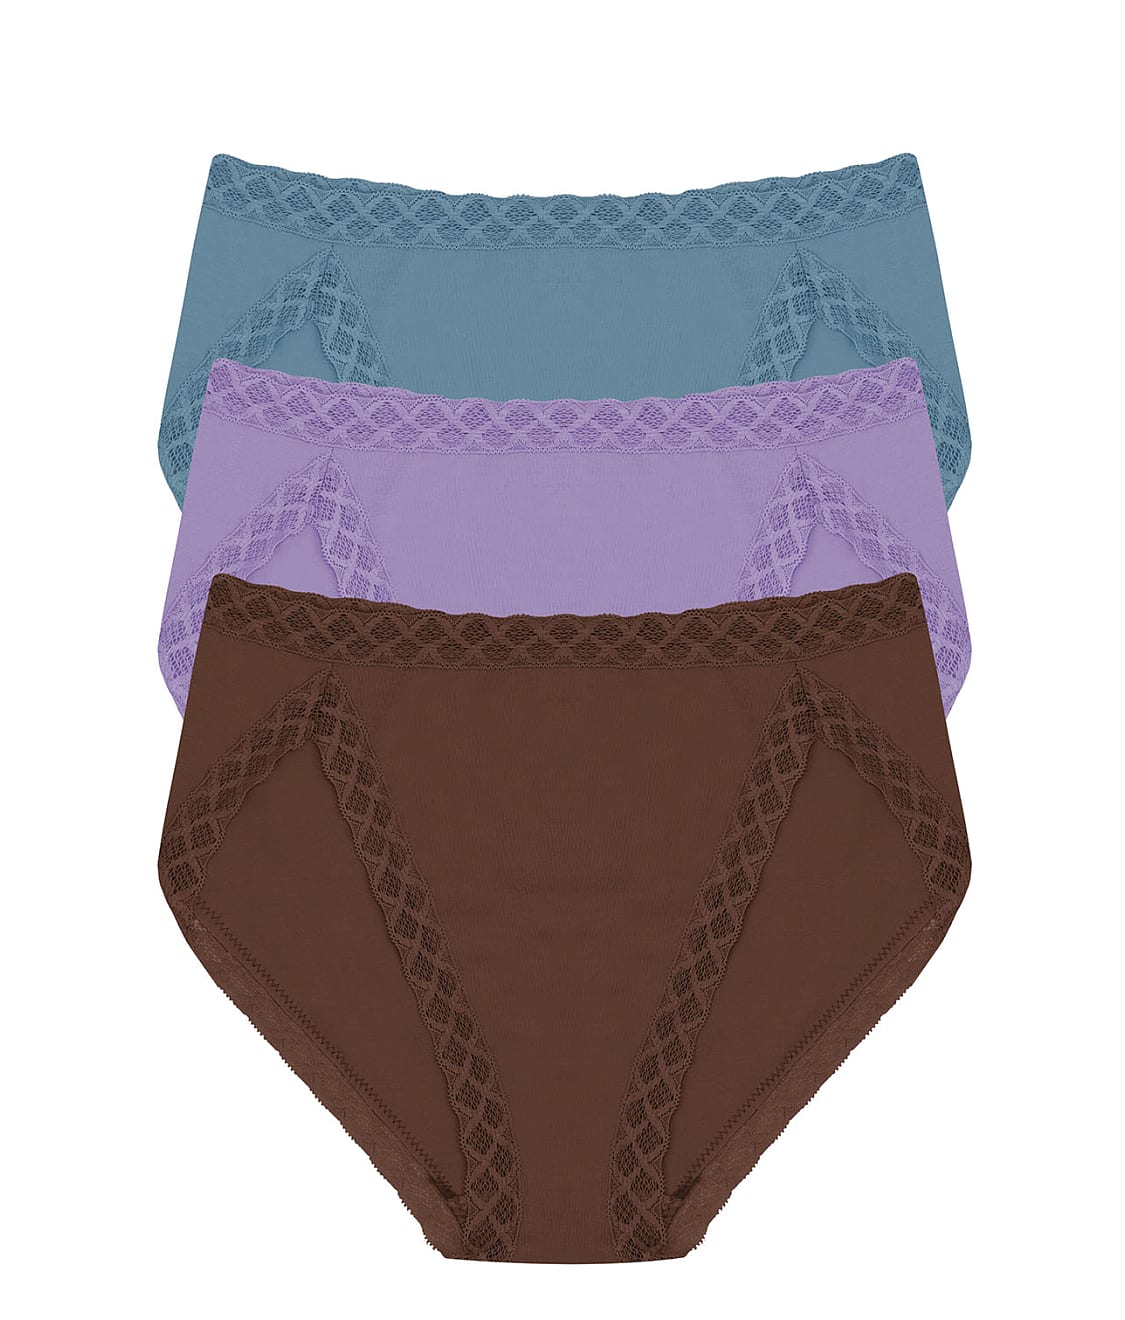 Cotton Isle Men's Drawstring Sweatpants X-Large / Purple Haze